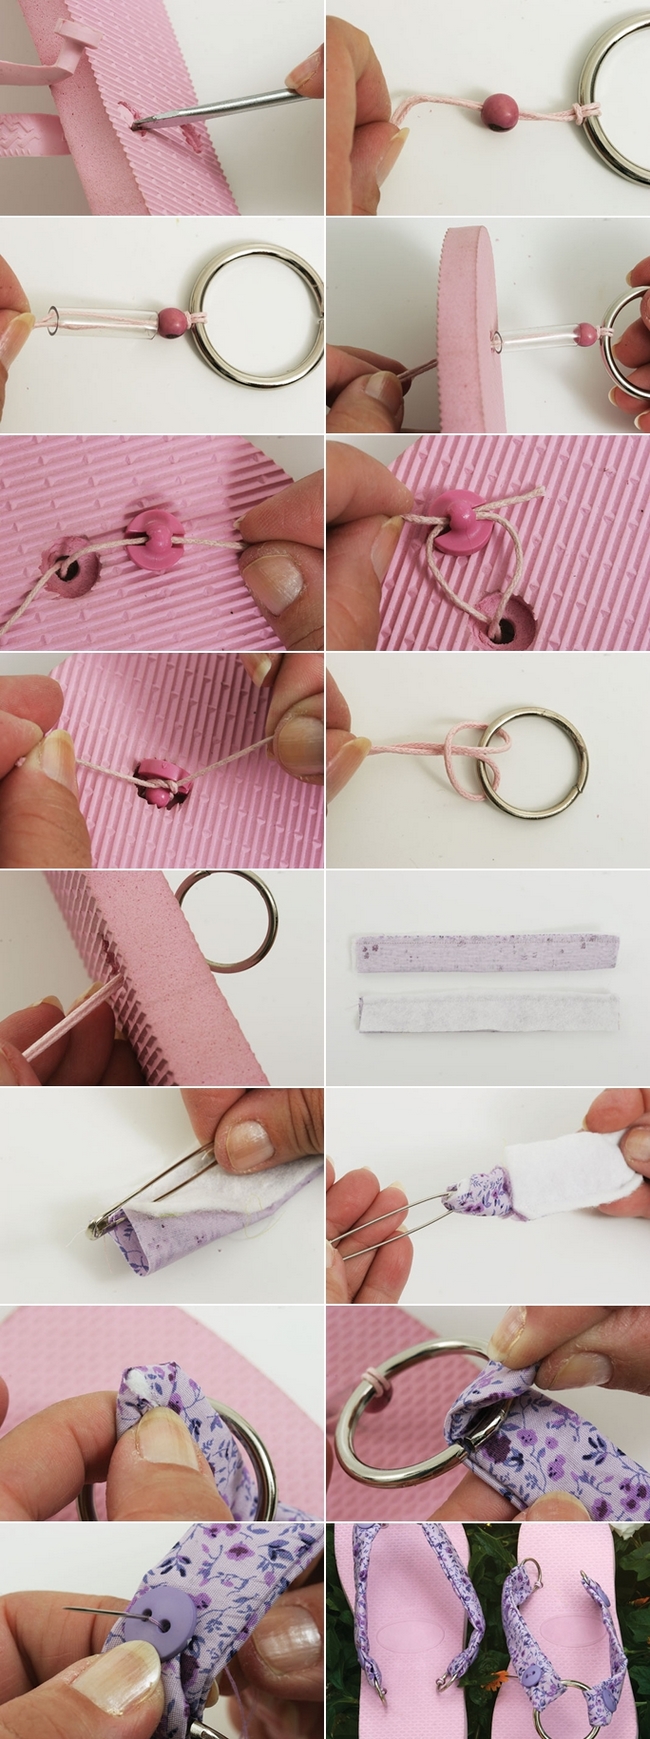 diy flip flops project pink sandals purple fabric metall ring